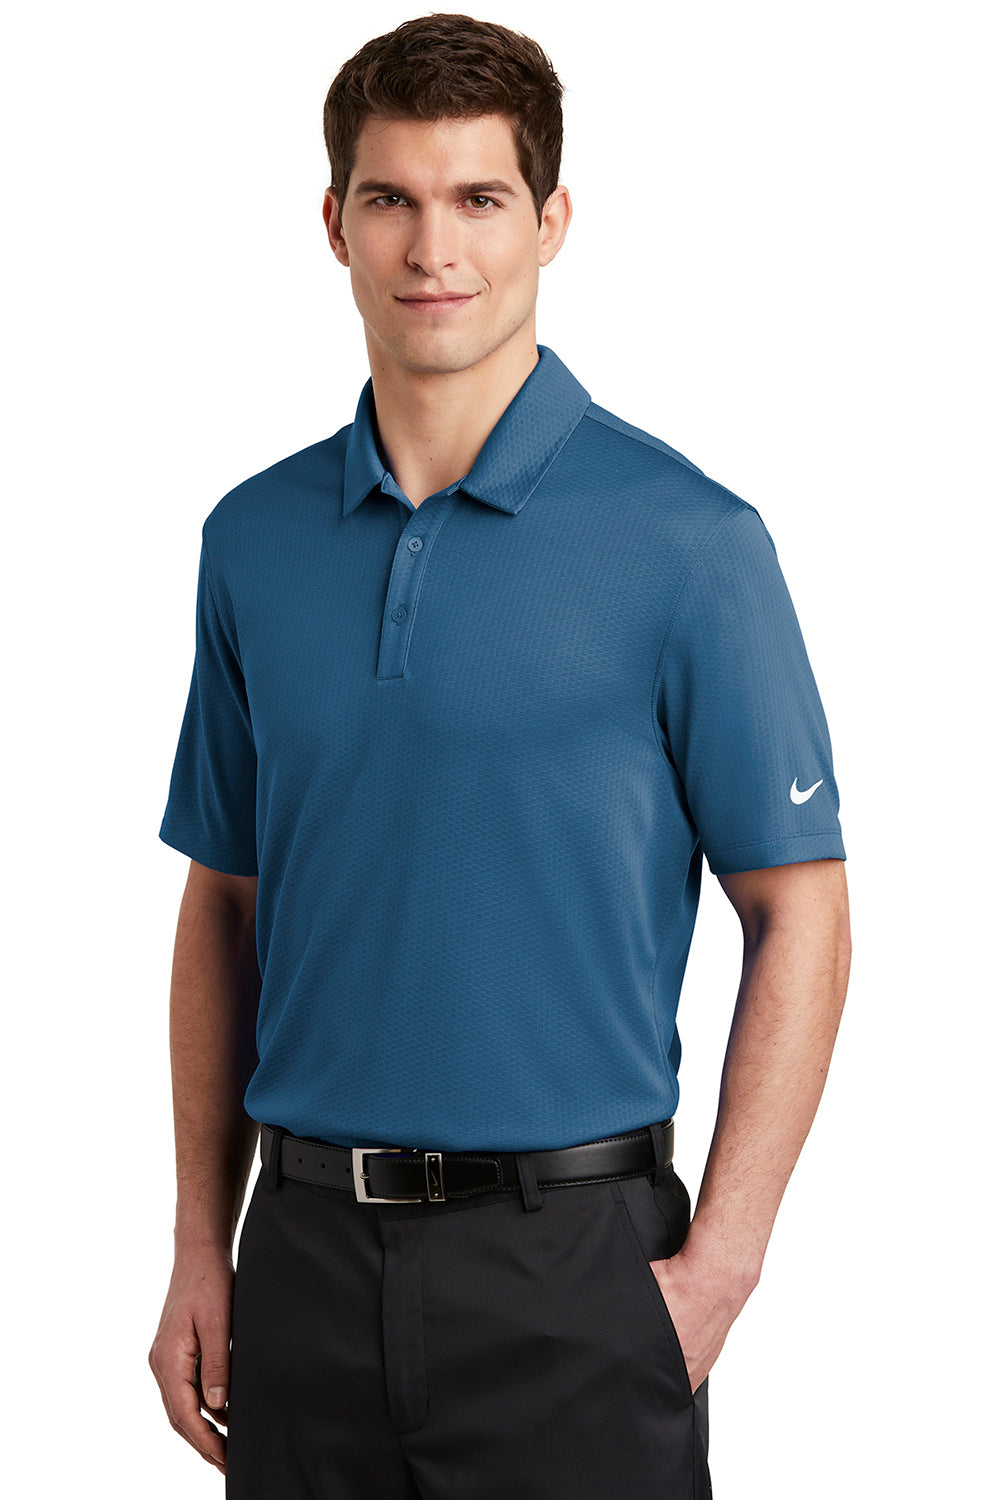 Nike NKAH6266 Mens Dri-Fit Moisture Wicking Short Sleeve Polo Shirt Court Blue Model 3Q